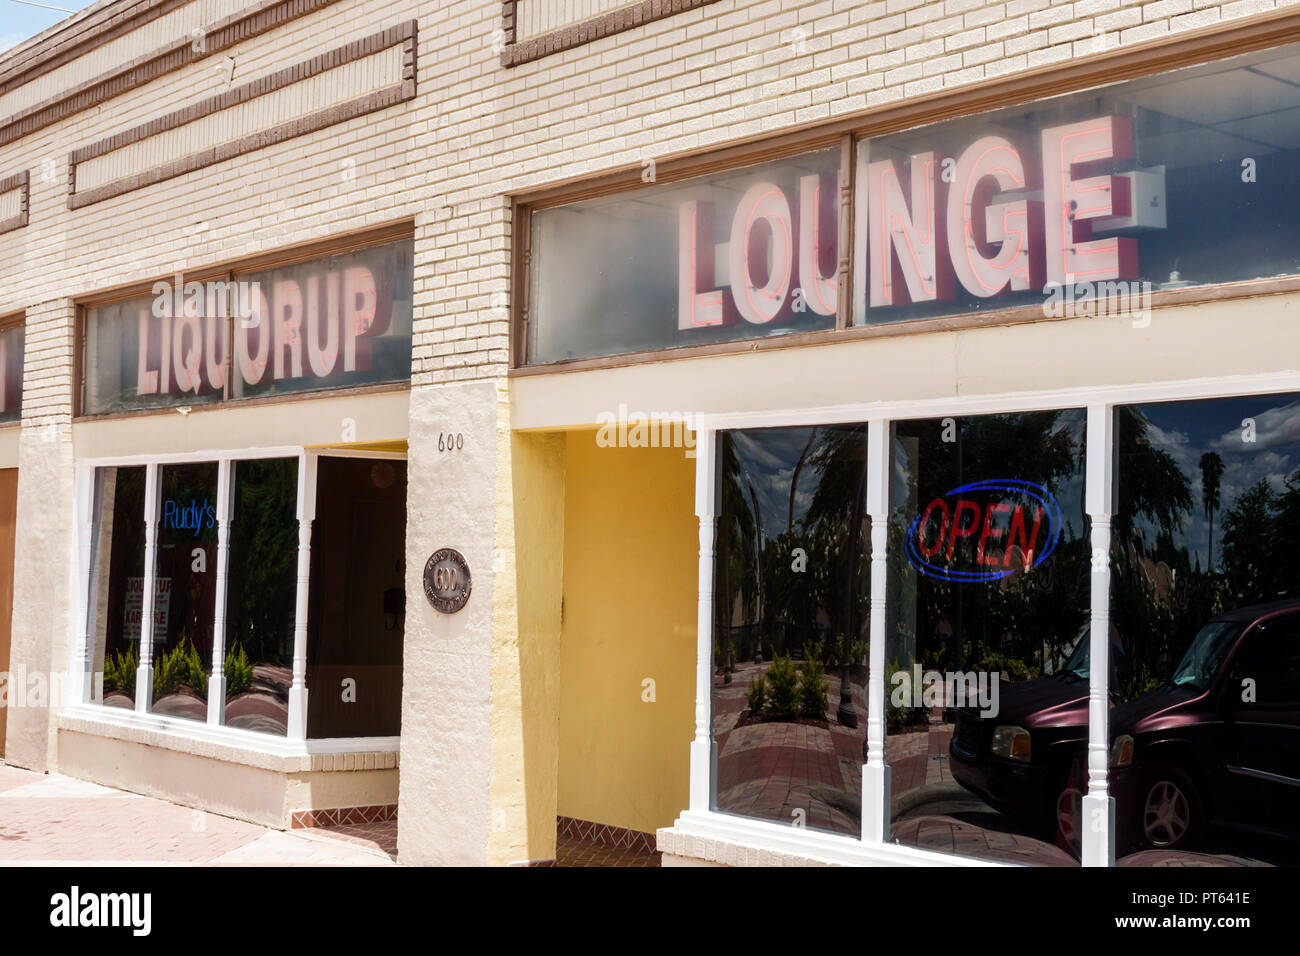 Florida, Haines City, Liquorup Lounge, Bar Lounge Pub, Pub, Neonschild am Eingang, FL180731201 Stockfoto